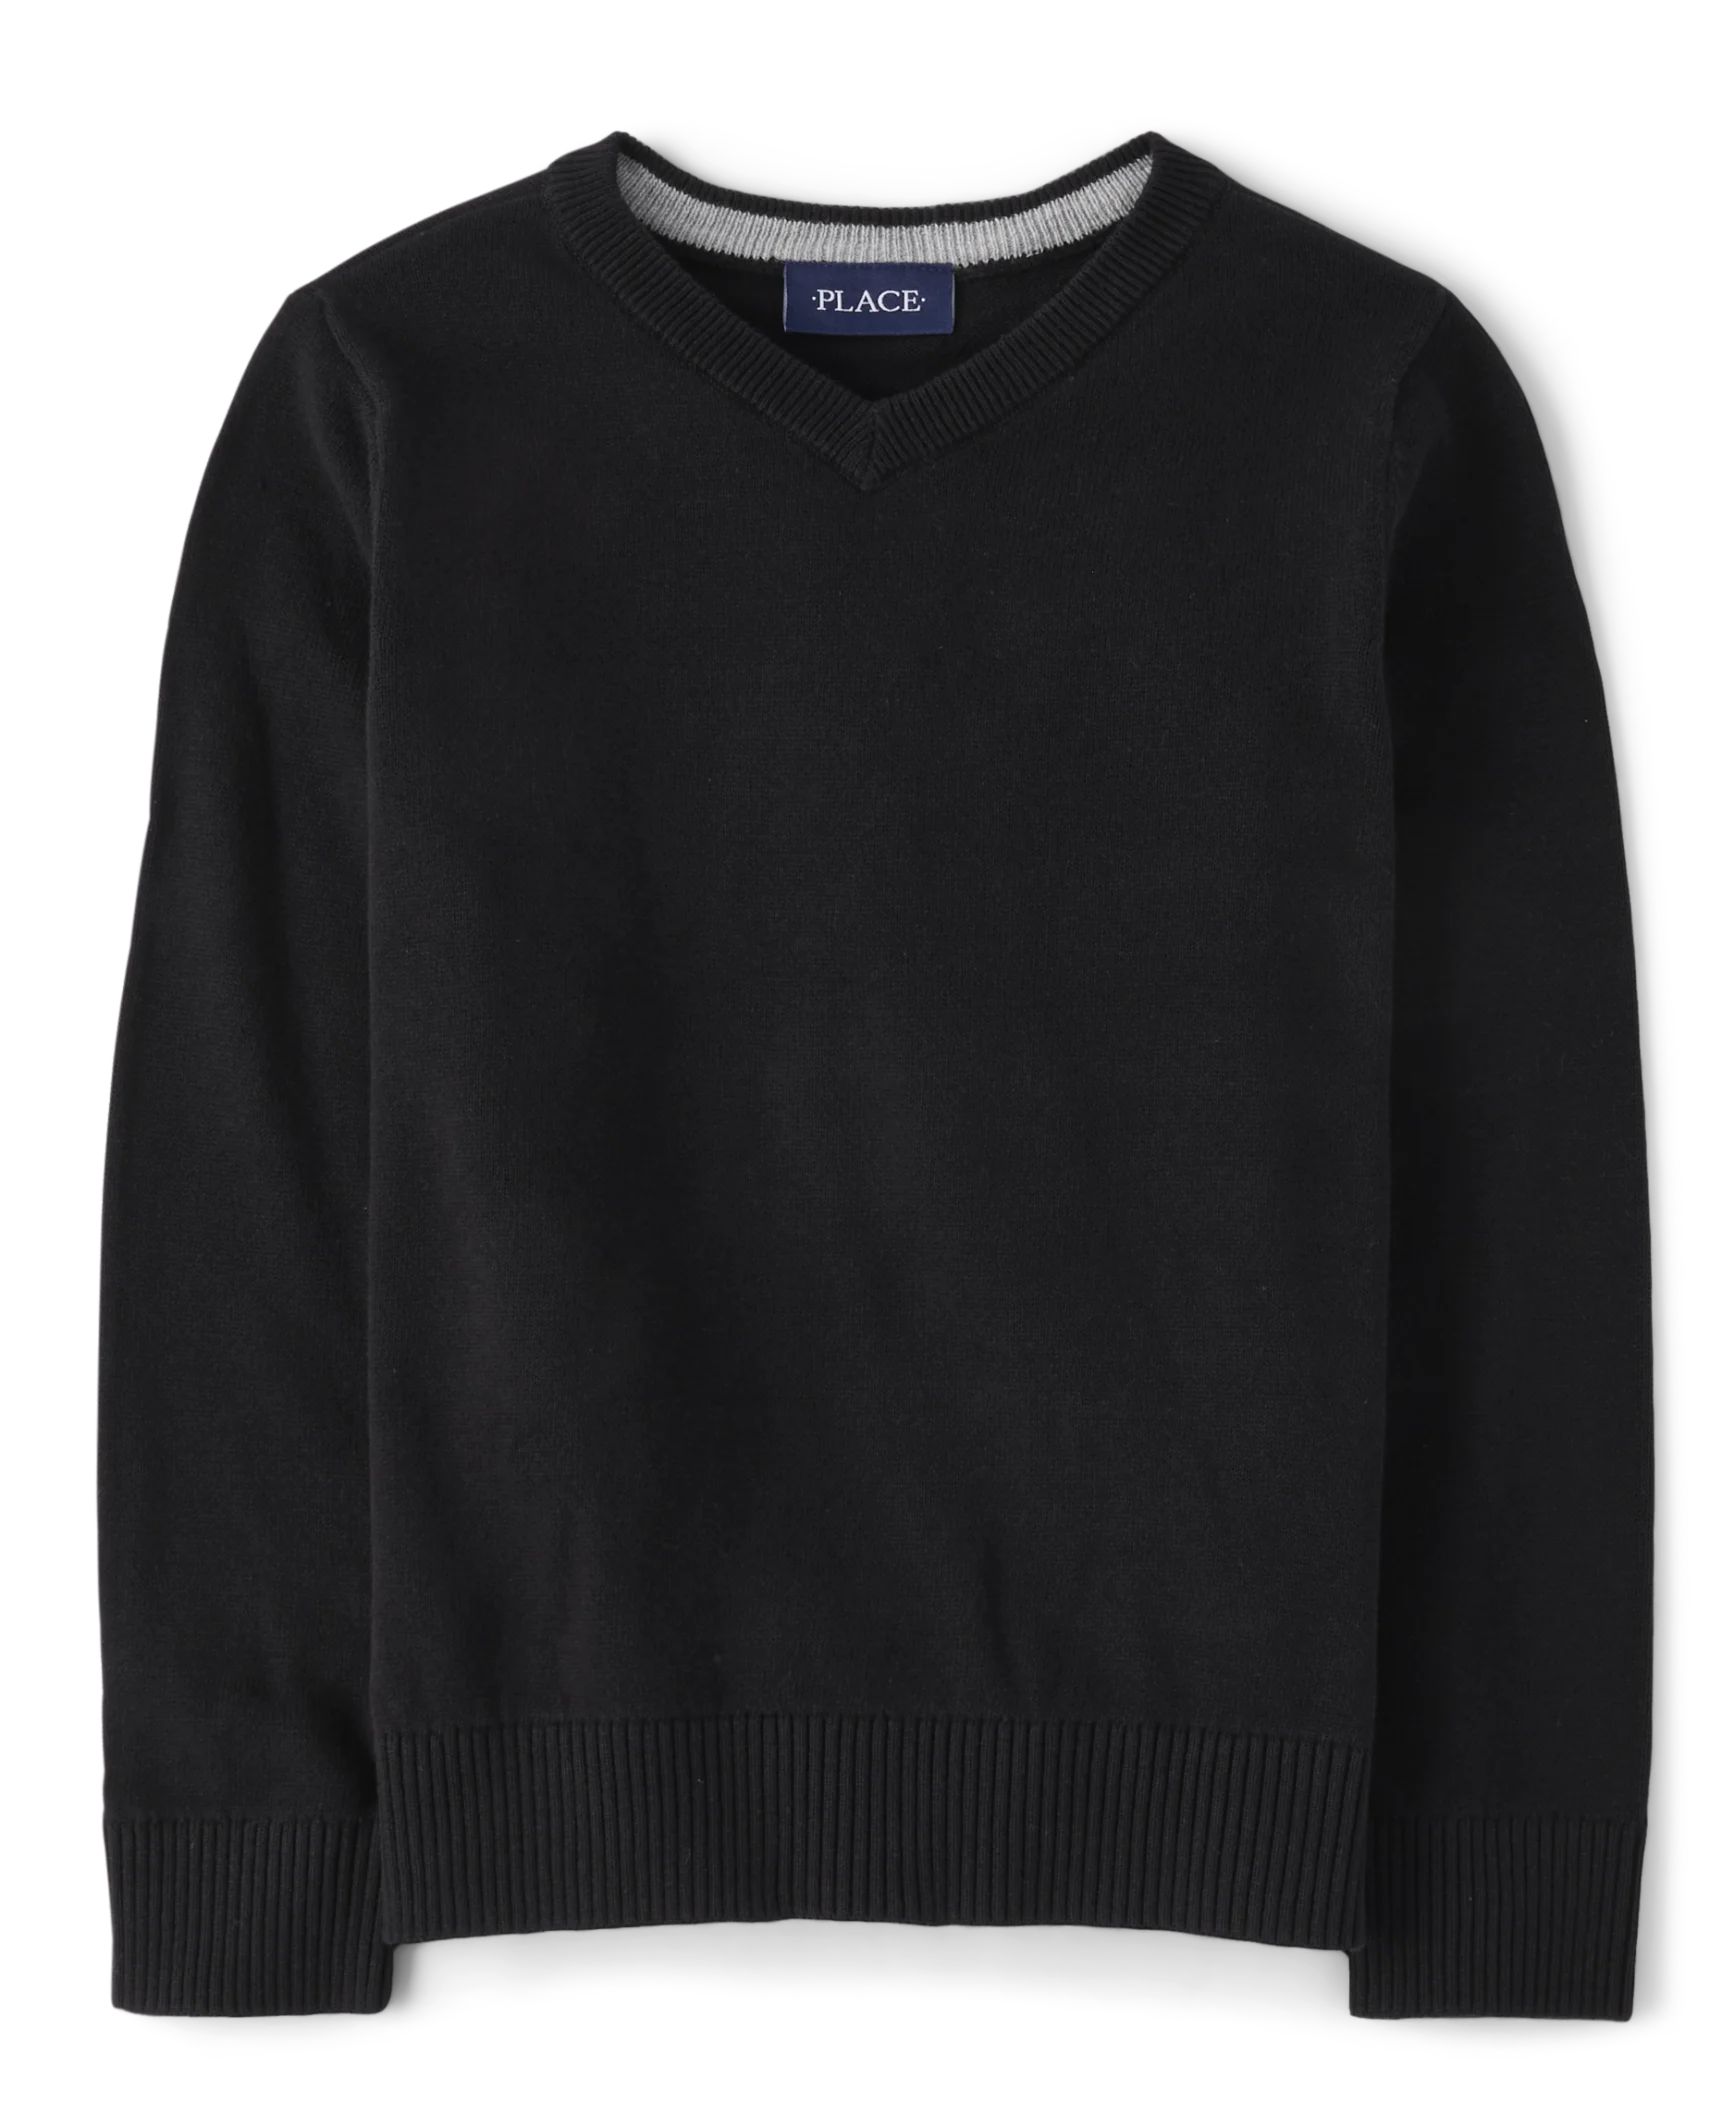 Boys V Neck Sweater - black | The Children's Place